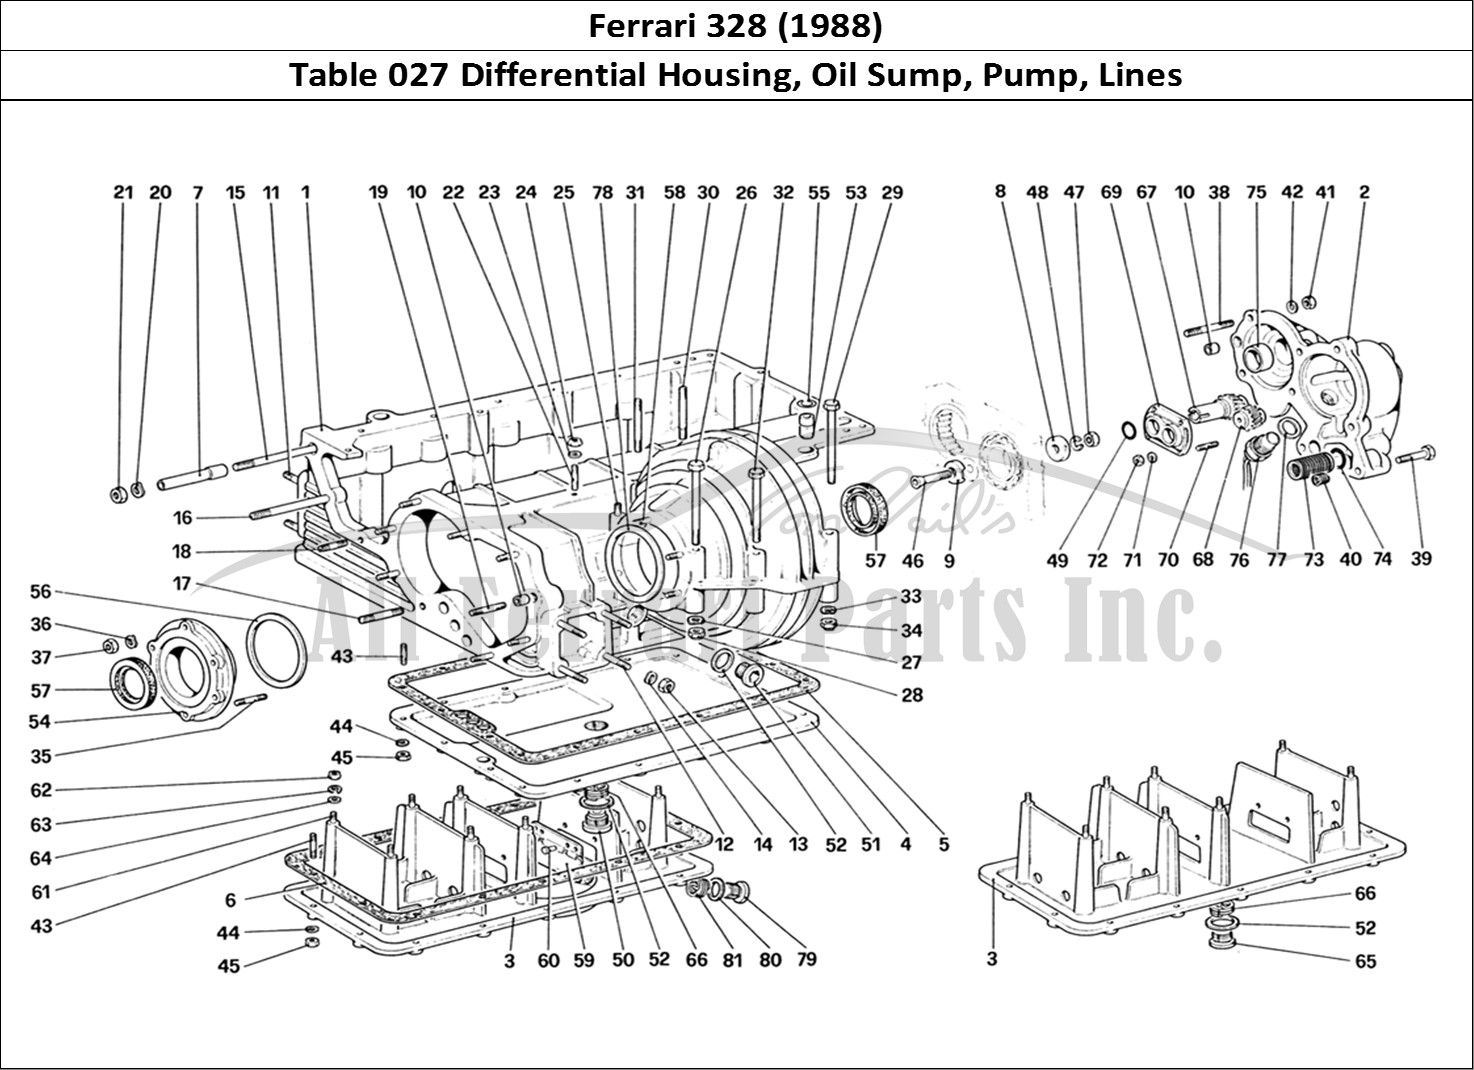 Ferrari Parts Ferrari 328 (1988) Page 027 Gearbox - Differential Ho